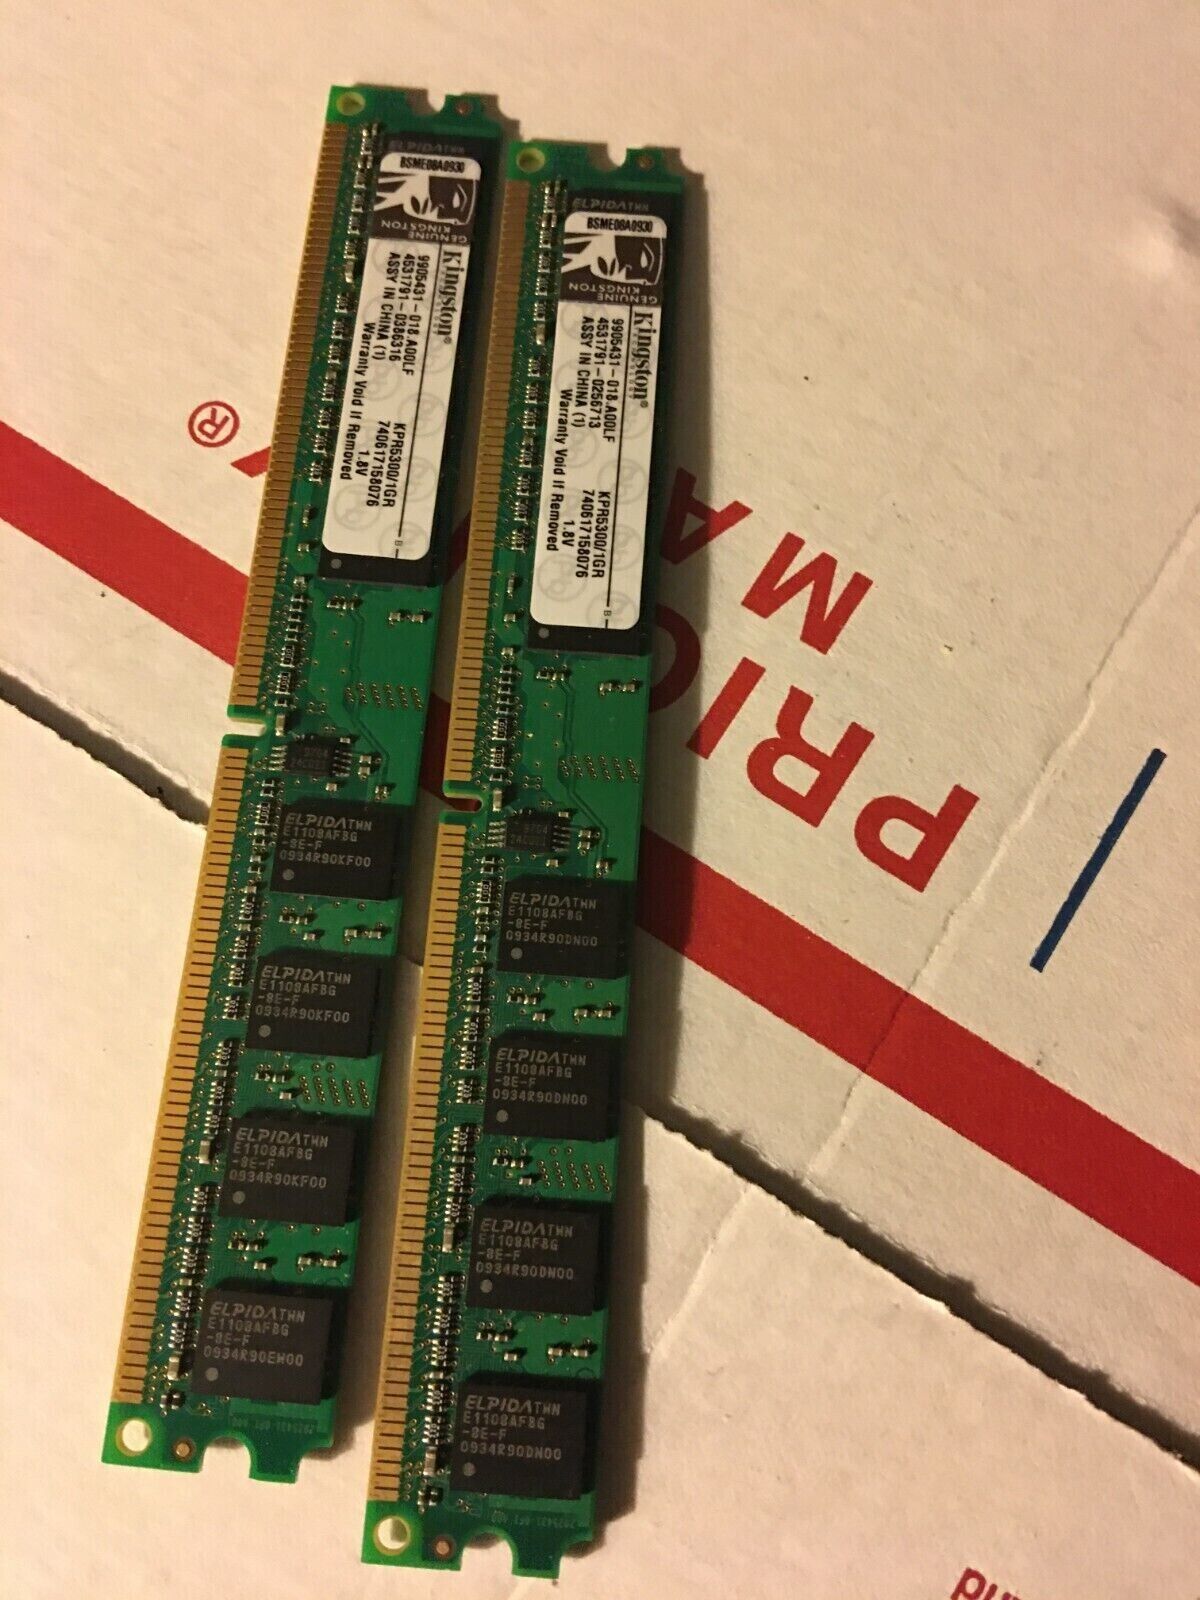 Genuine Kingston KPR5300/1GR 2GB (2x1GB) DDR2 667 PC2-5300 Desktop Memory RAM